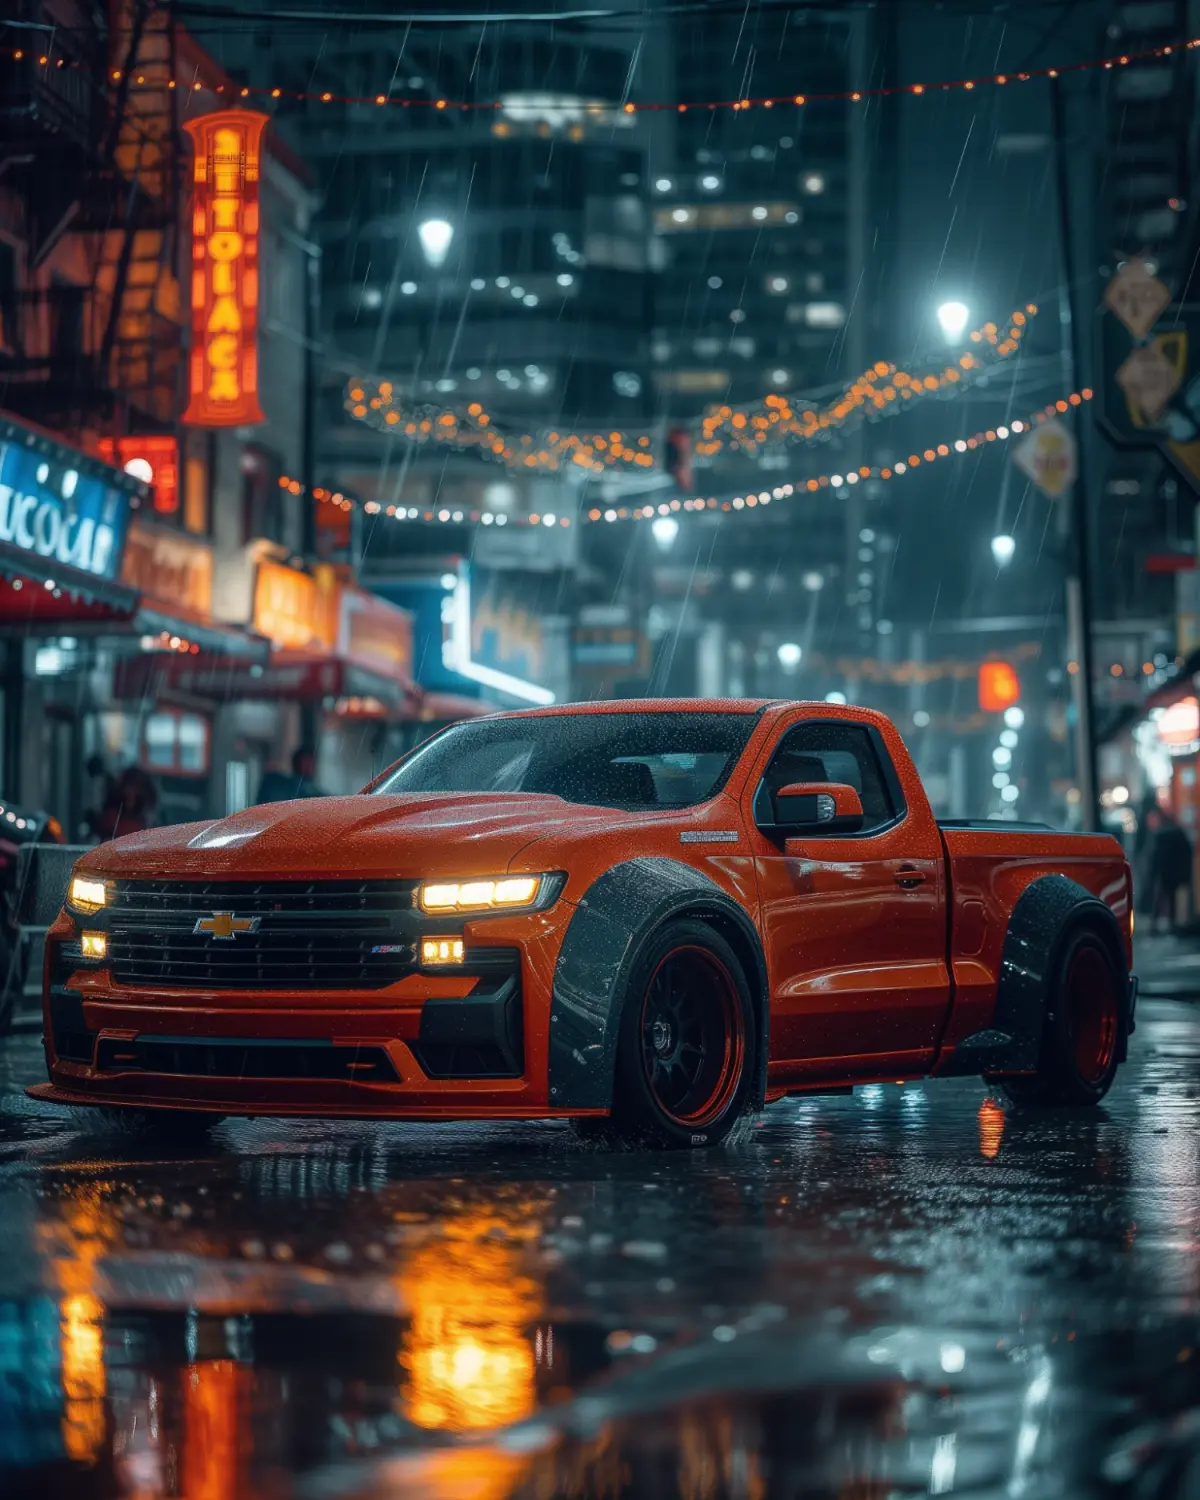 Street performance oriented Chevrolet S10 in an urban night scene